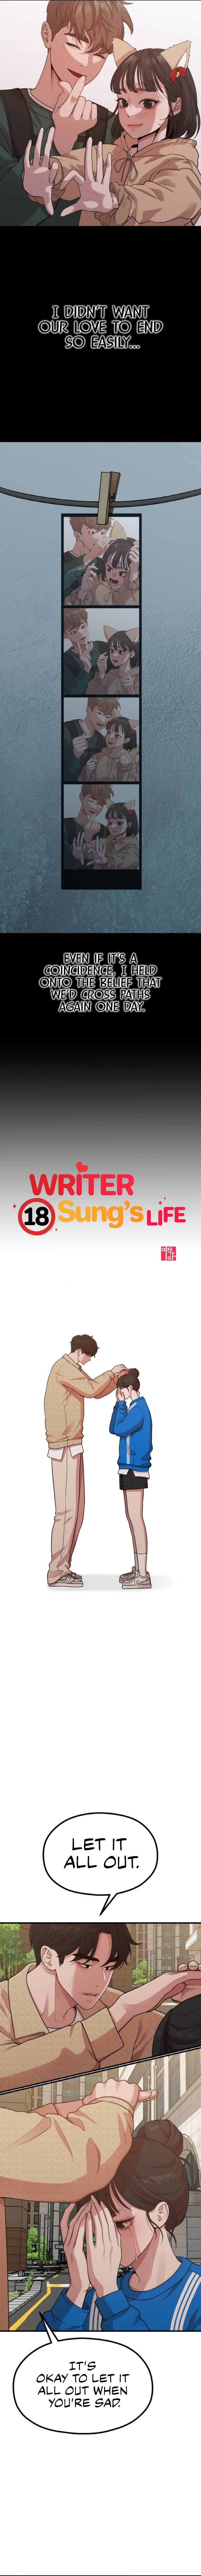 writer-sungs-life-chap-29-5